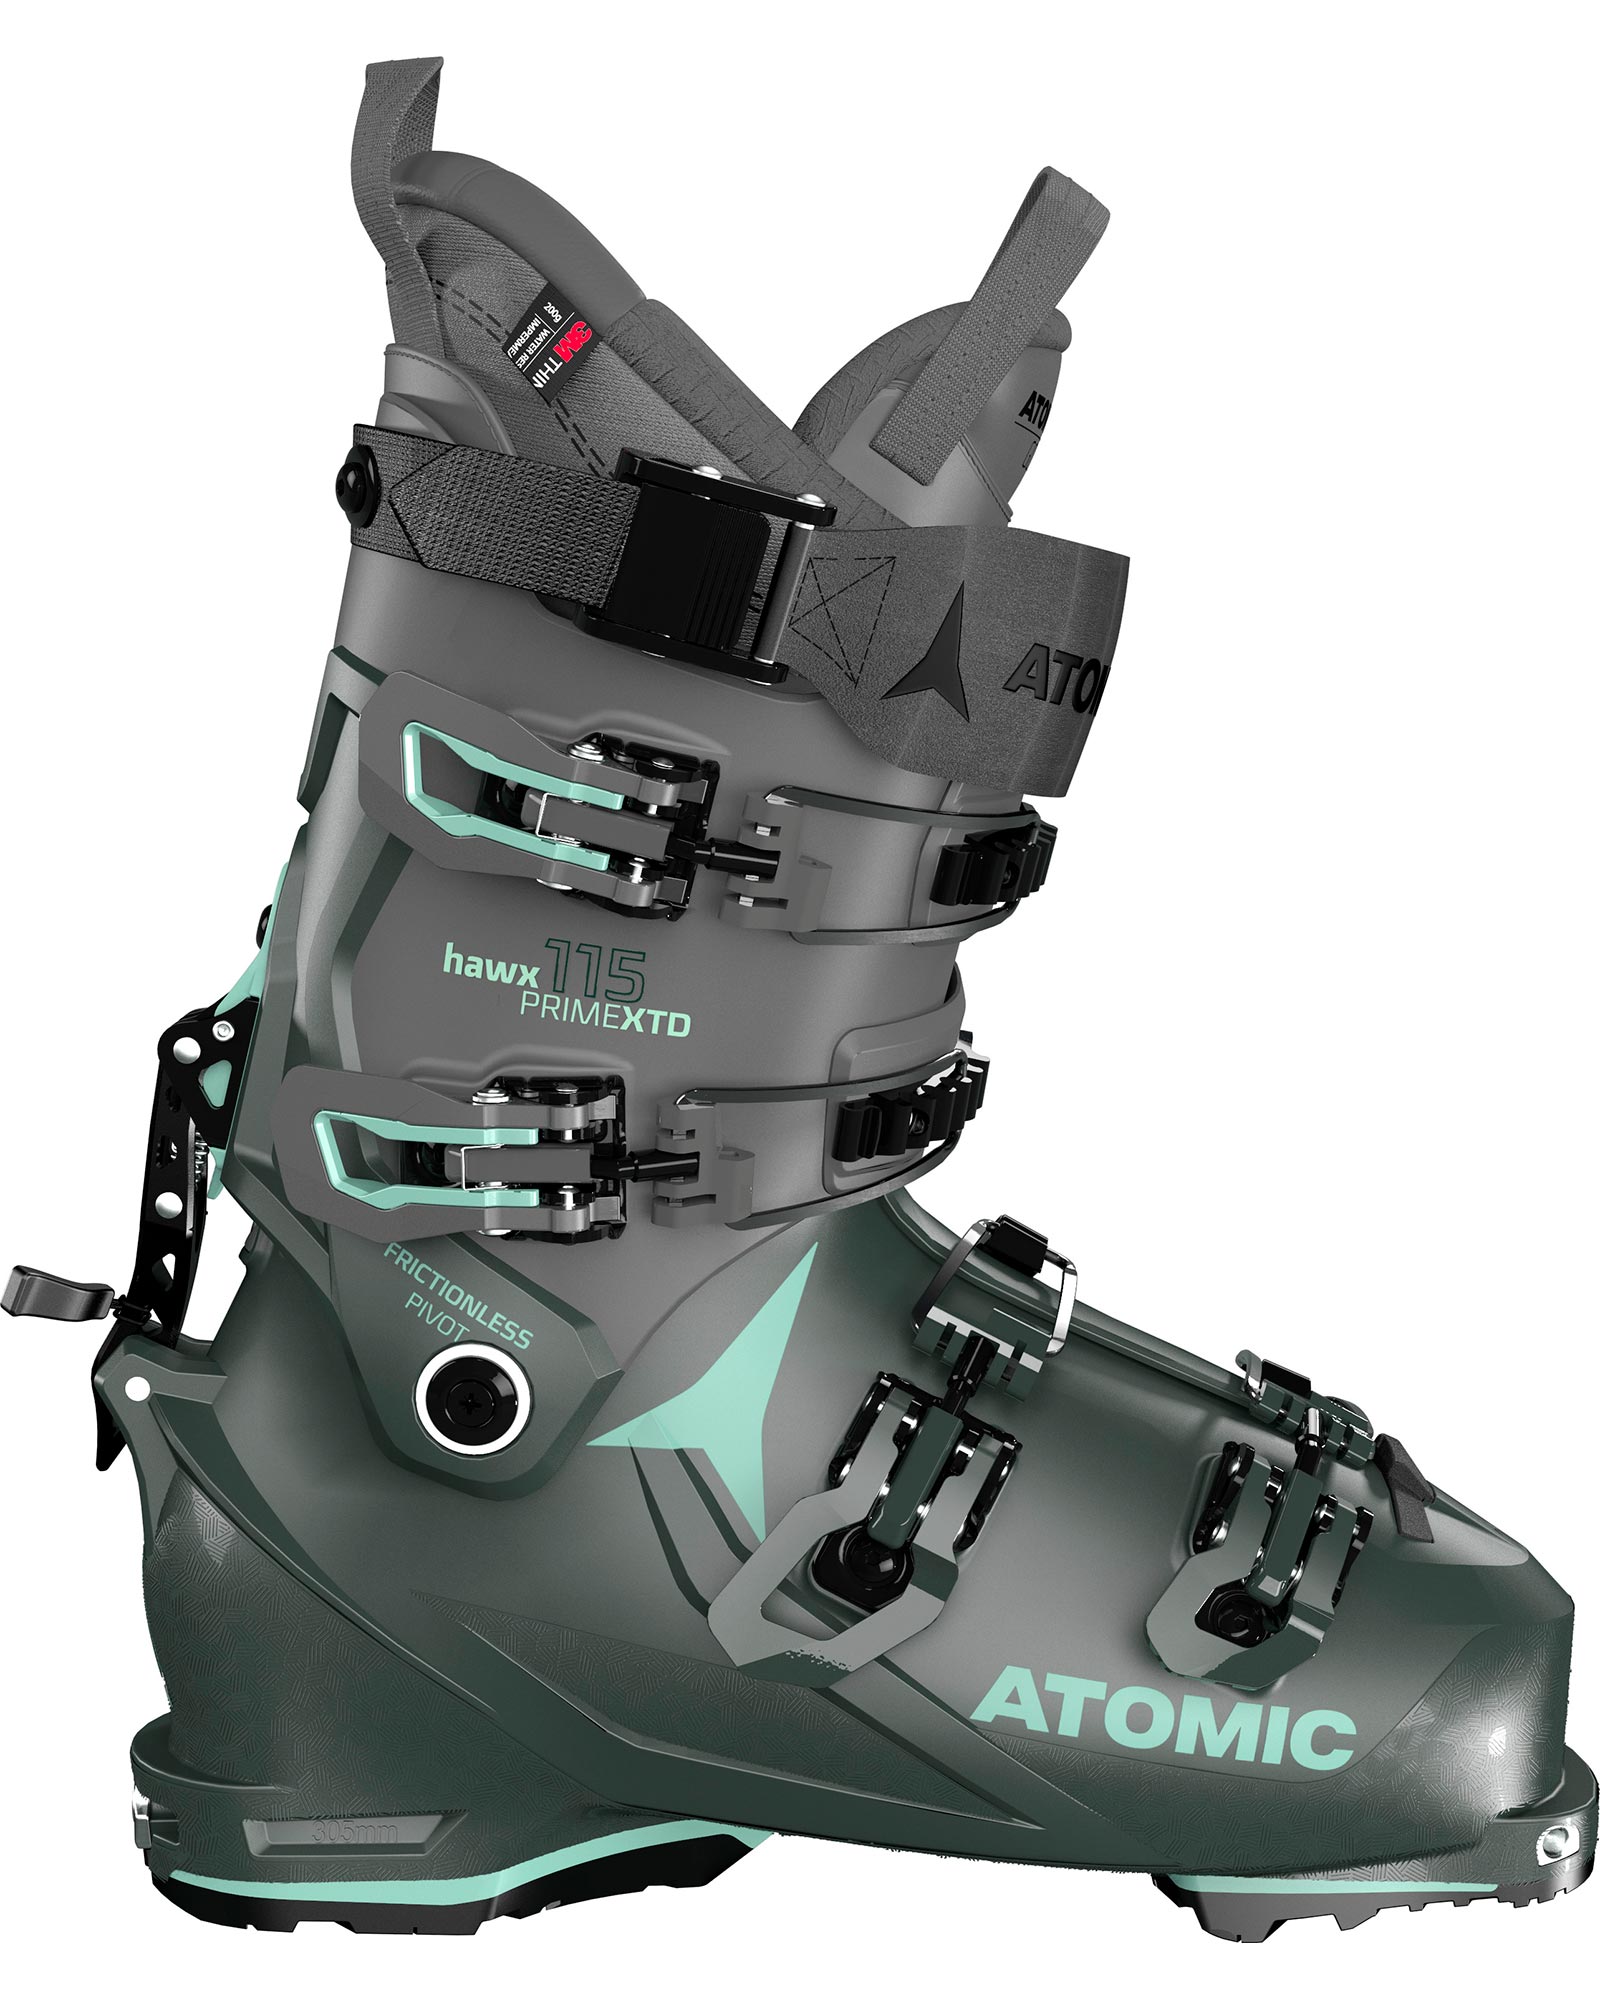 Atomic Hawx Prime XTD 115 CT GW Women’s Ski Boots 2022 - Green/Anthracite/Mint MP 25.0